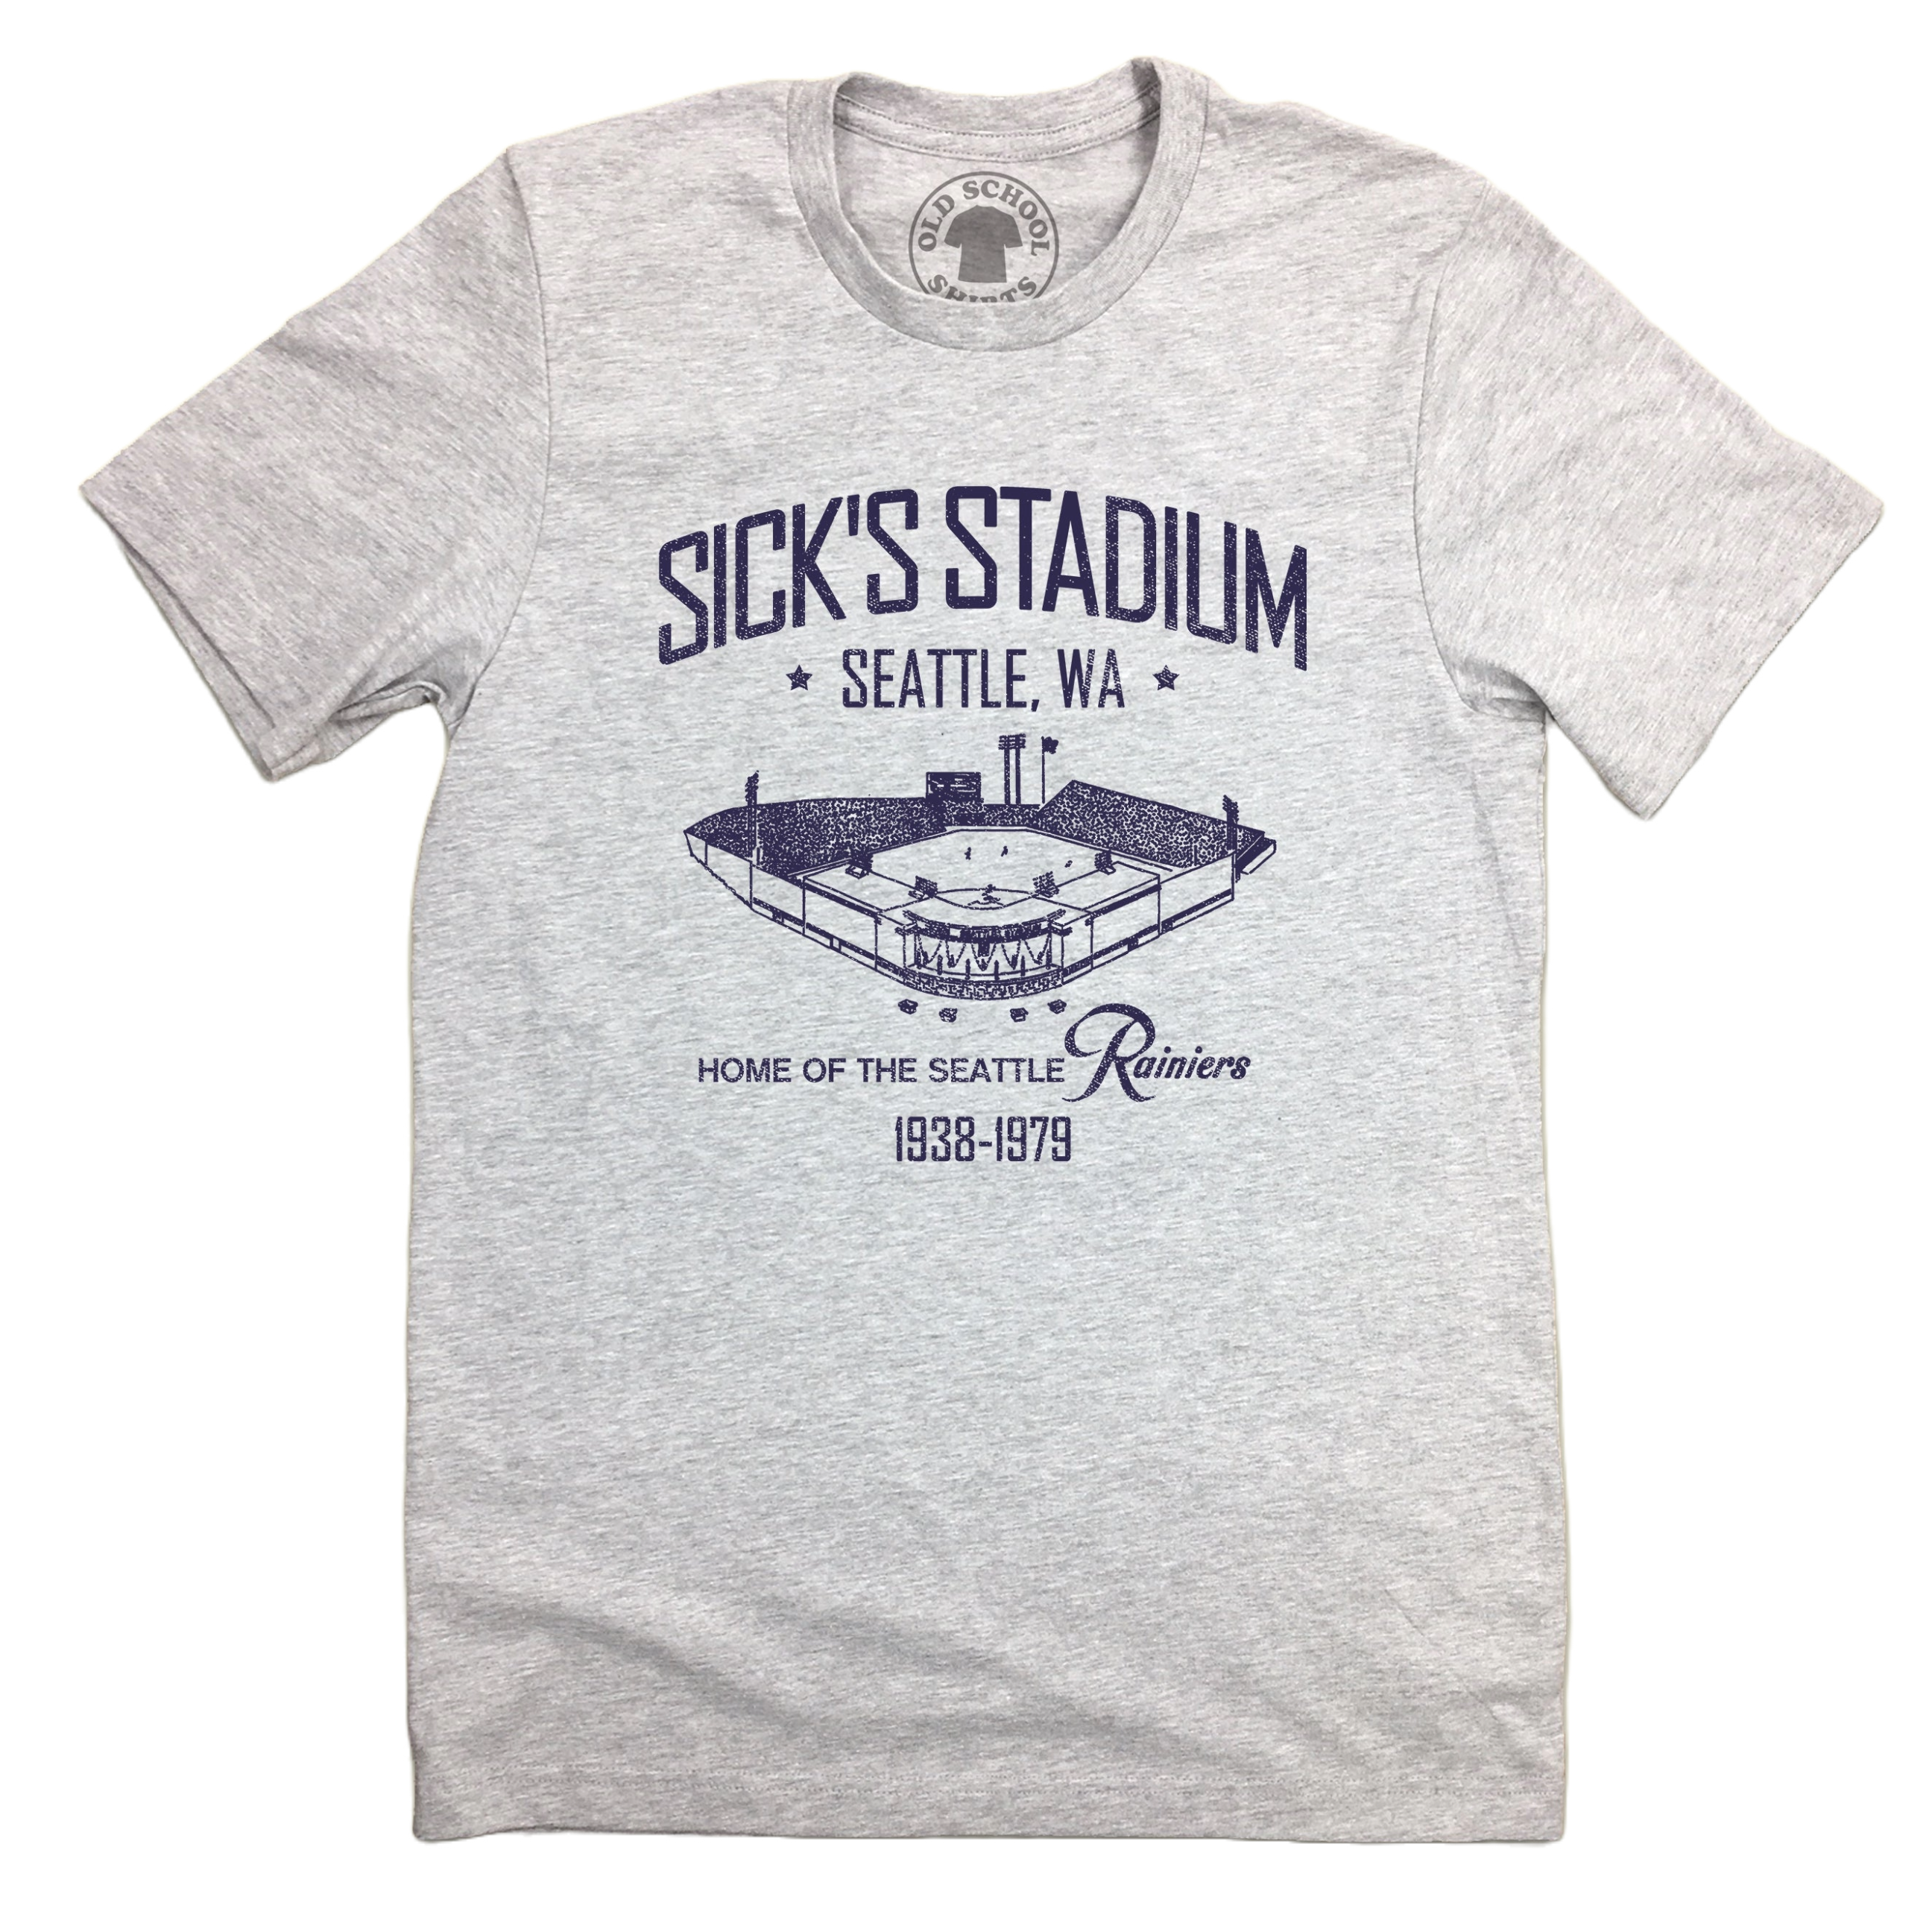 Sick's Stadium, Vintage Seattle Sports Apparel